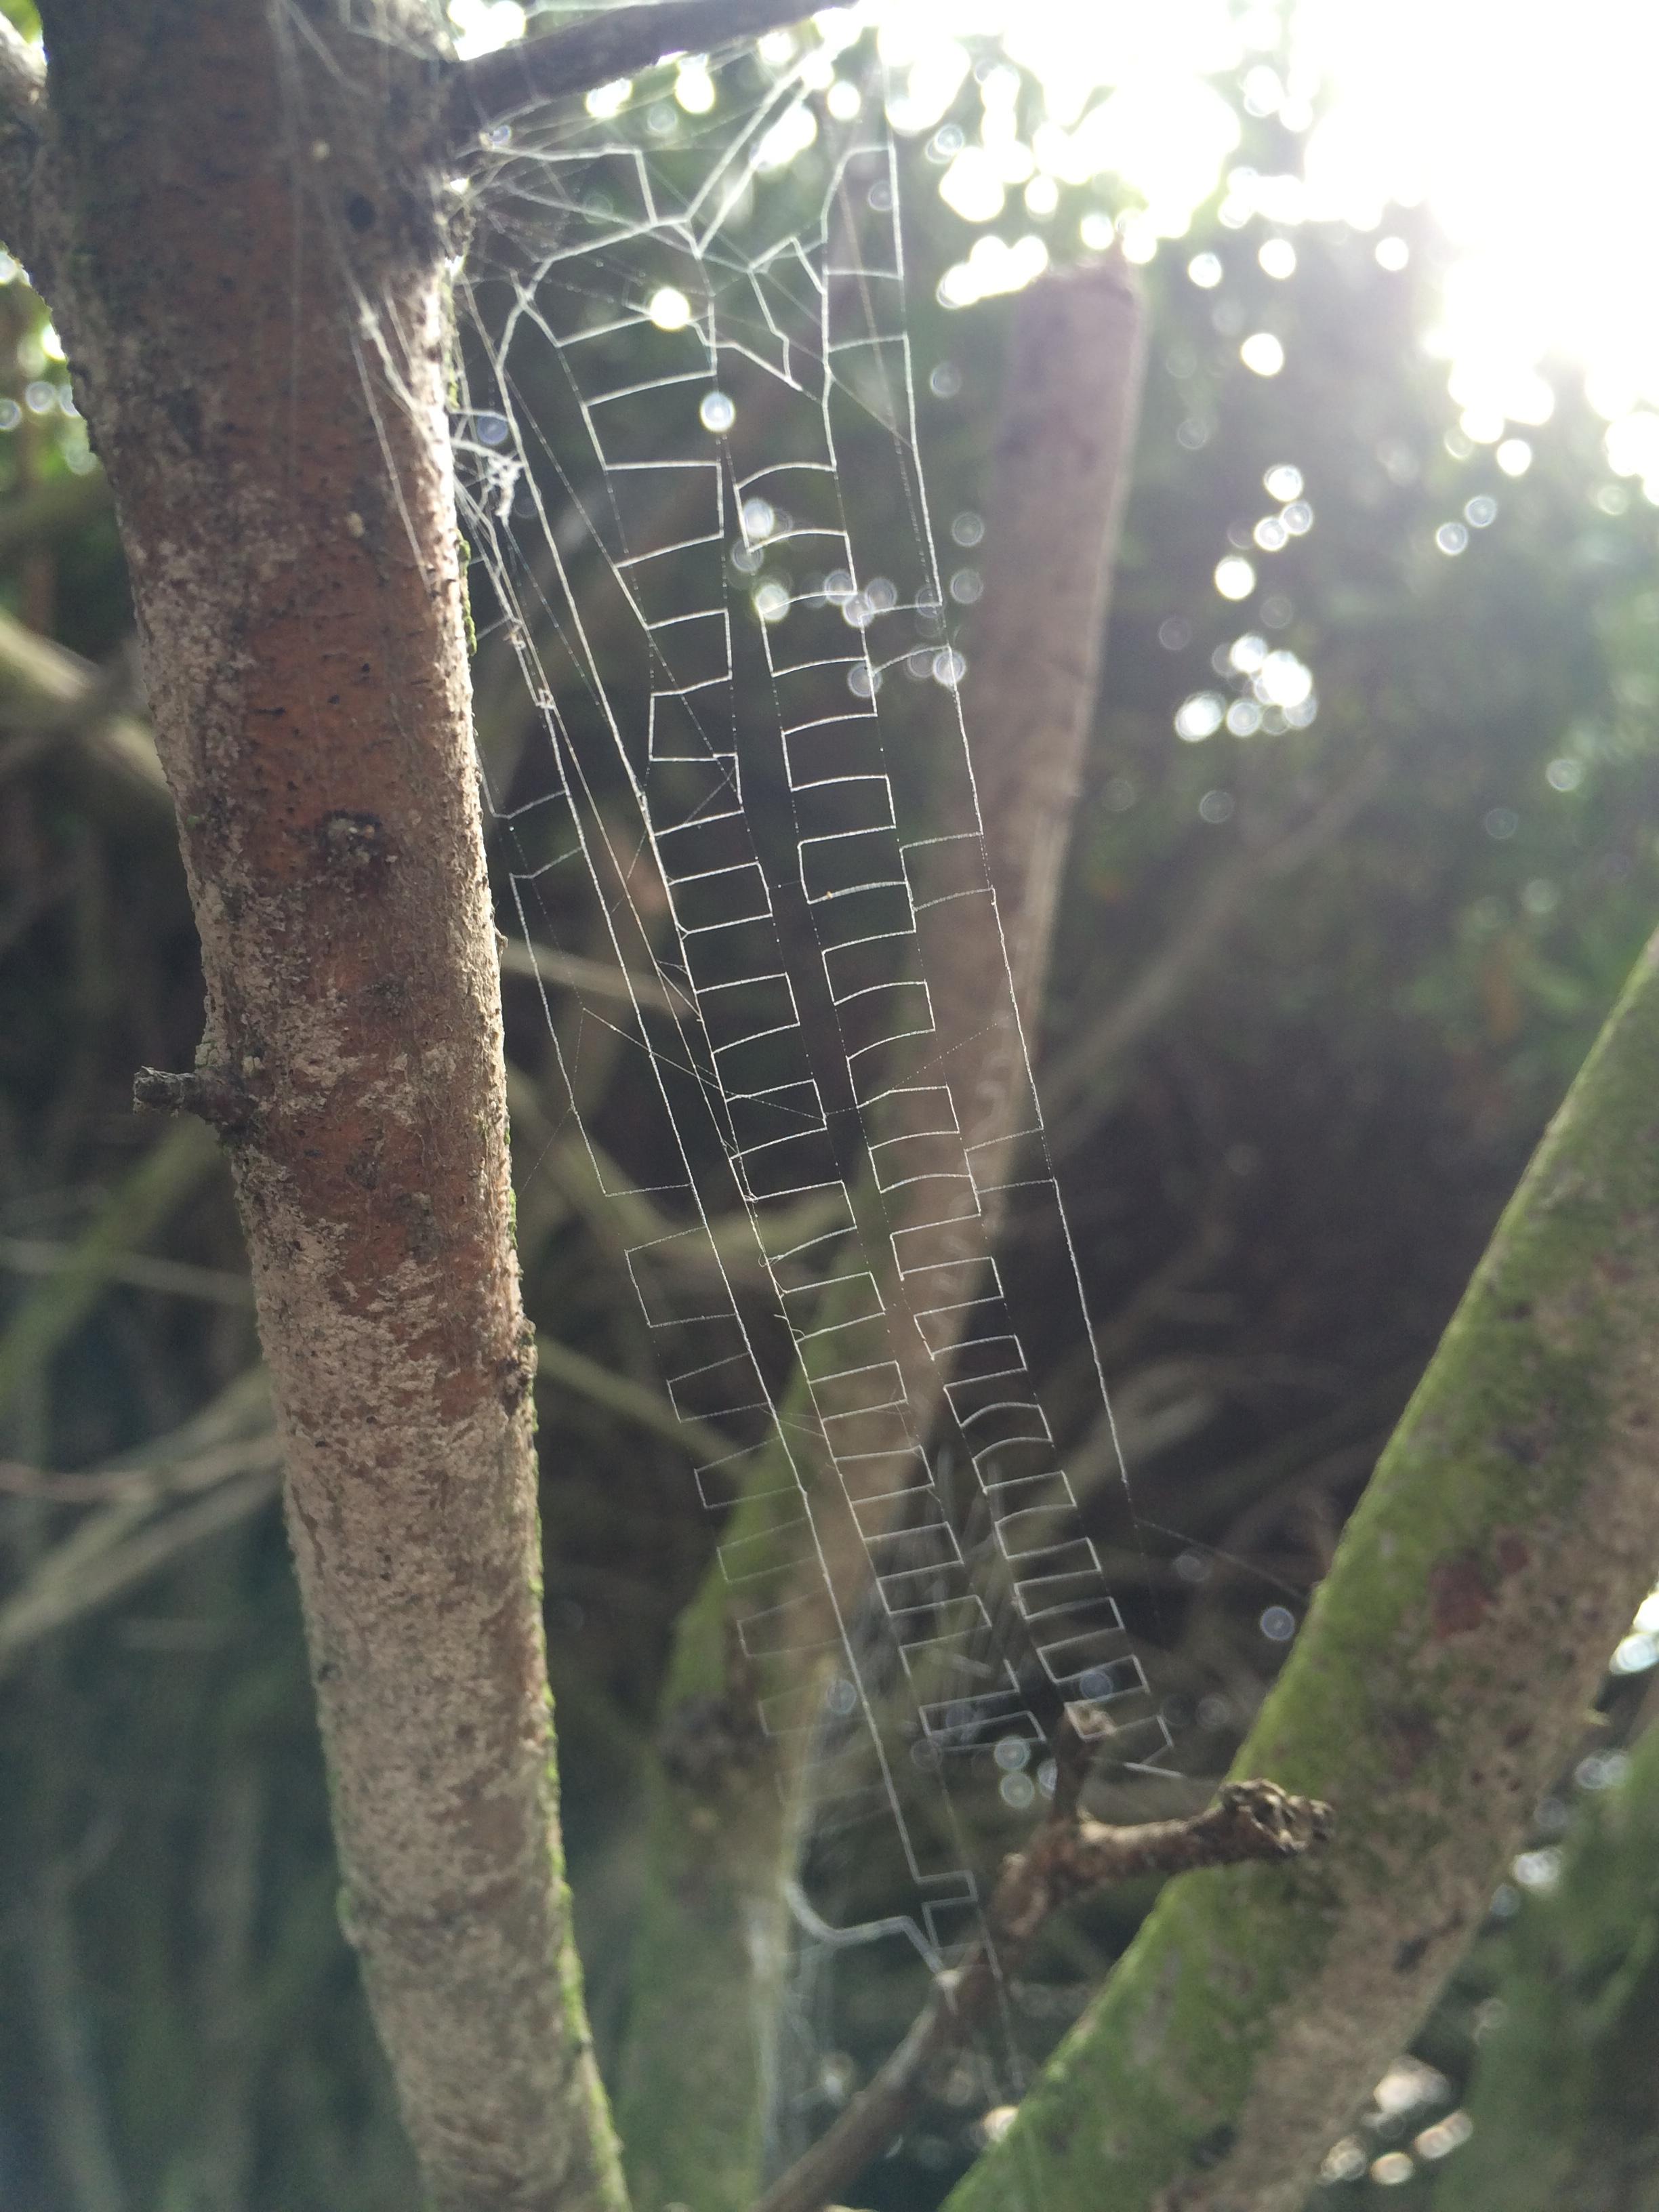 This zipper-like spider web : mildlyinteresting